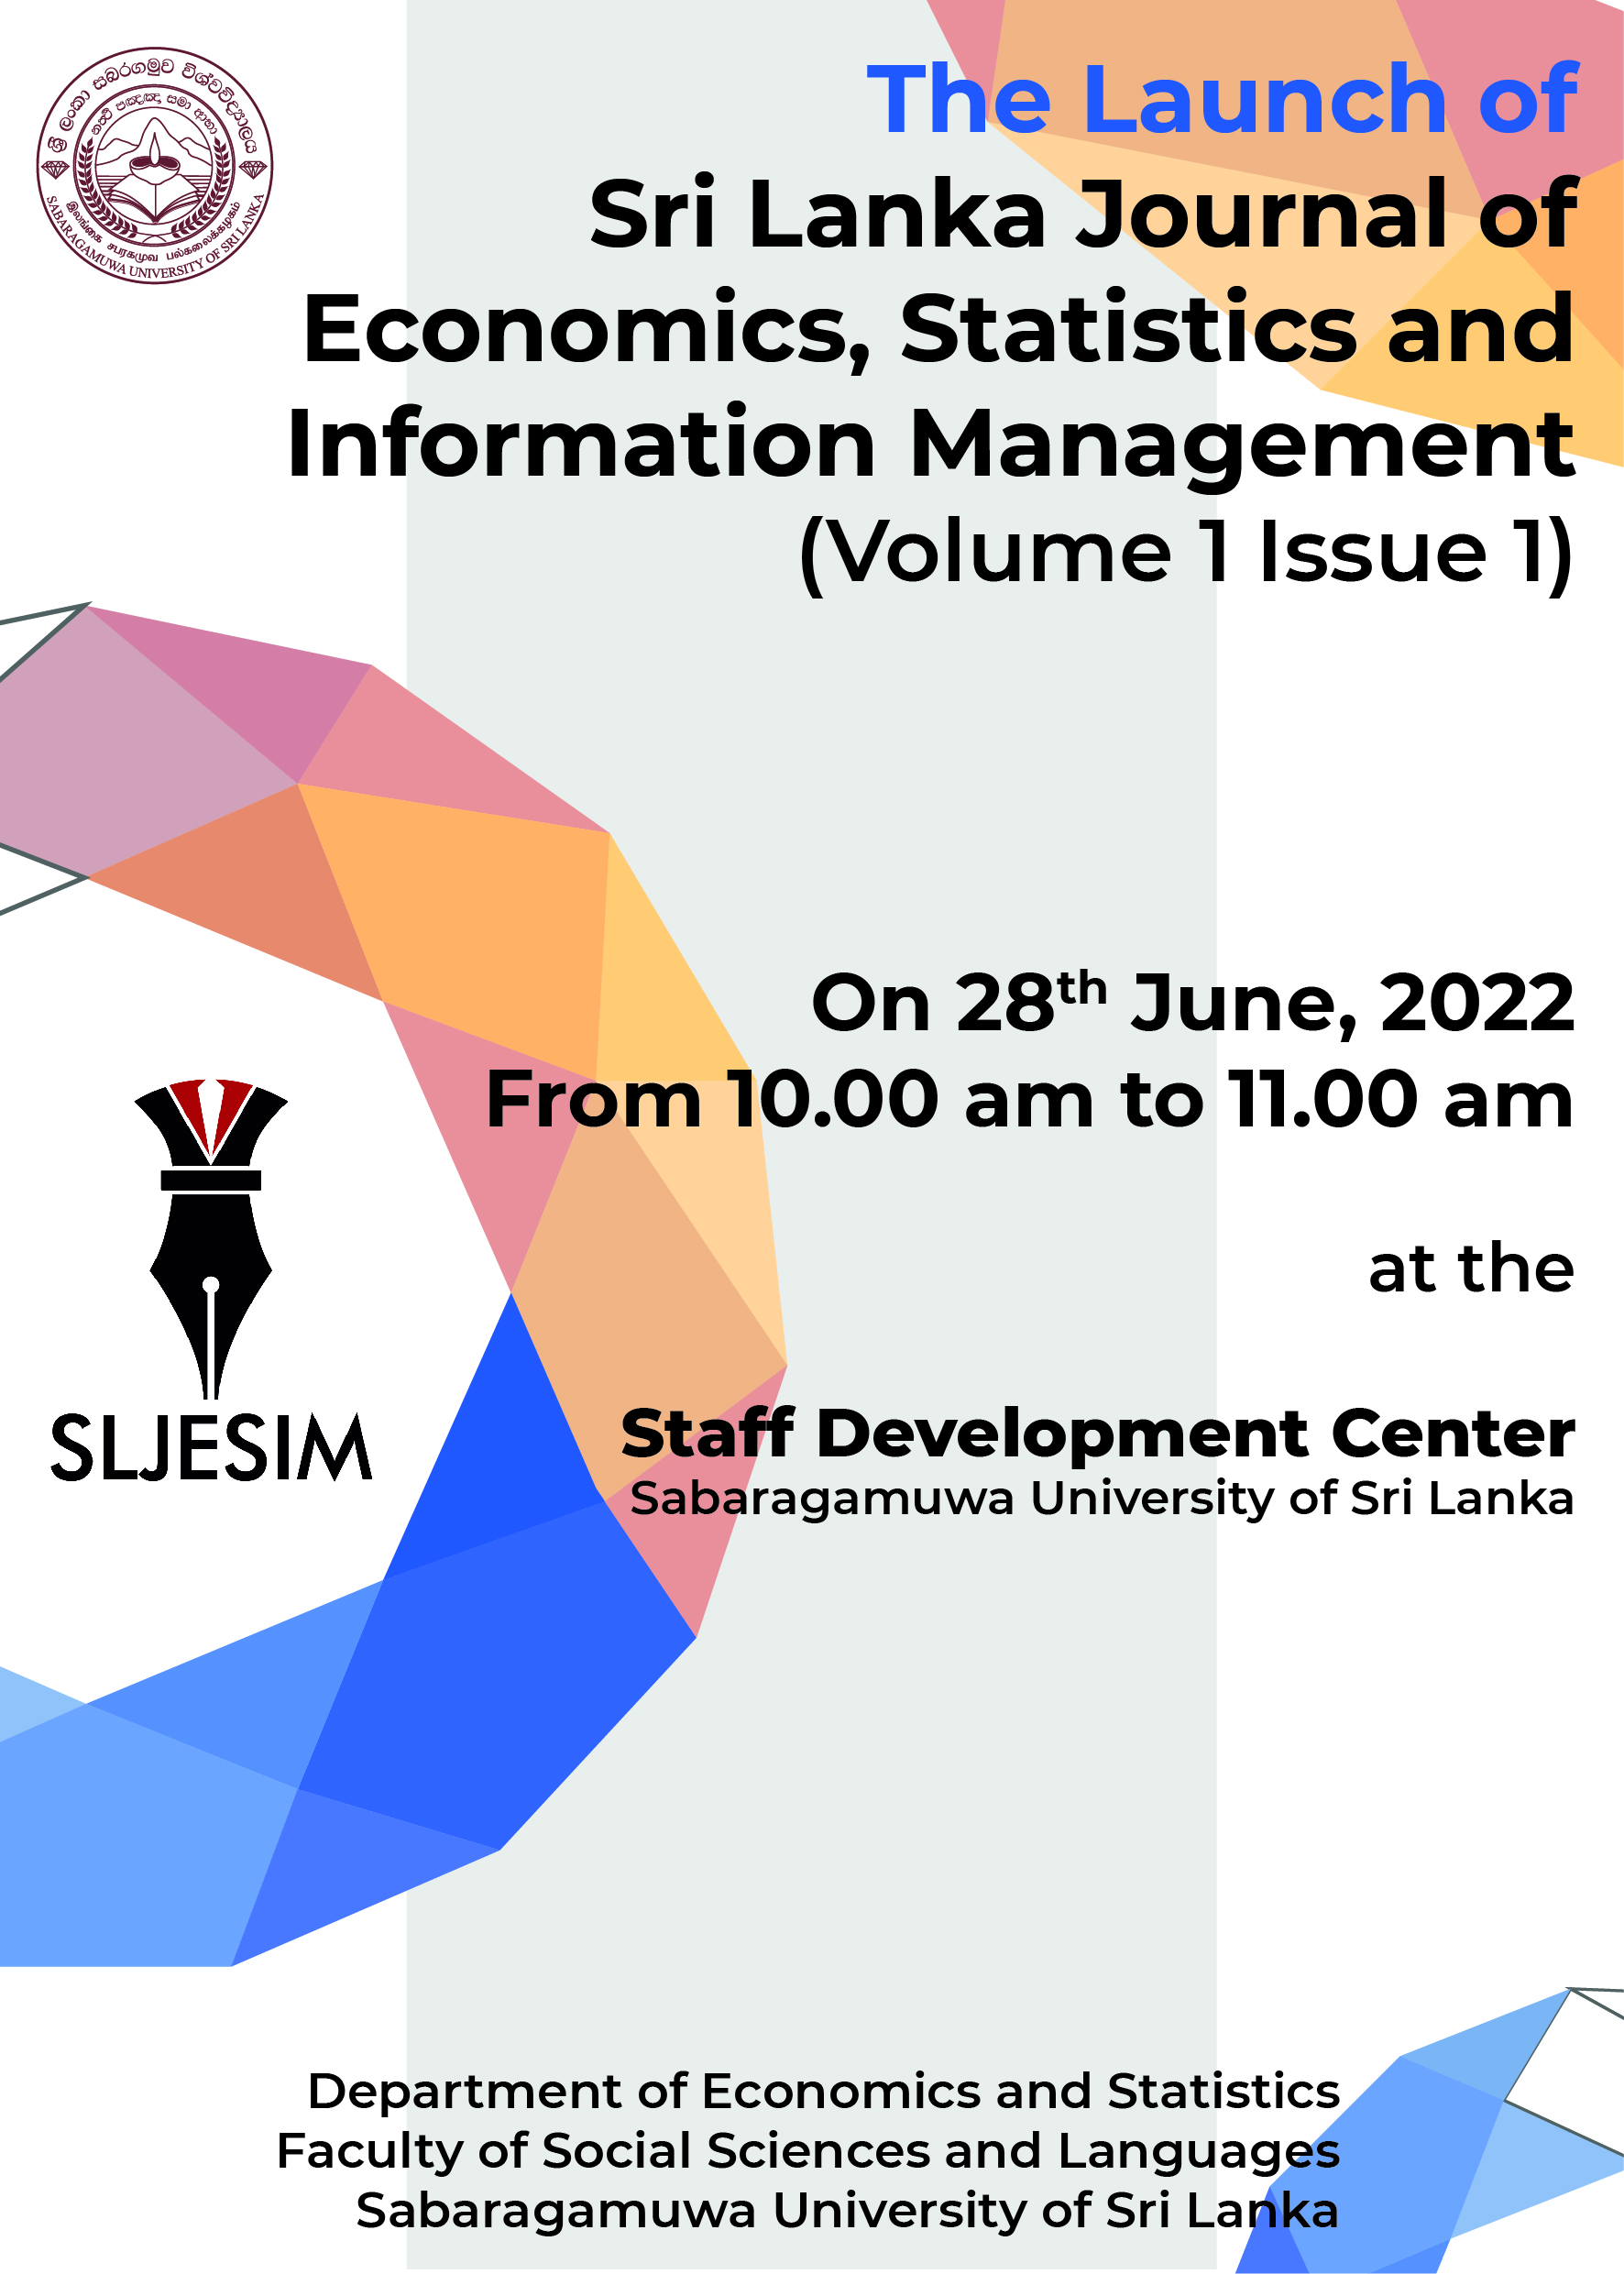 Launching the Sri Lanka Journal of Economics, Statistics and Information Management -SLJESIM